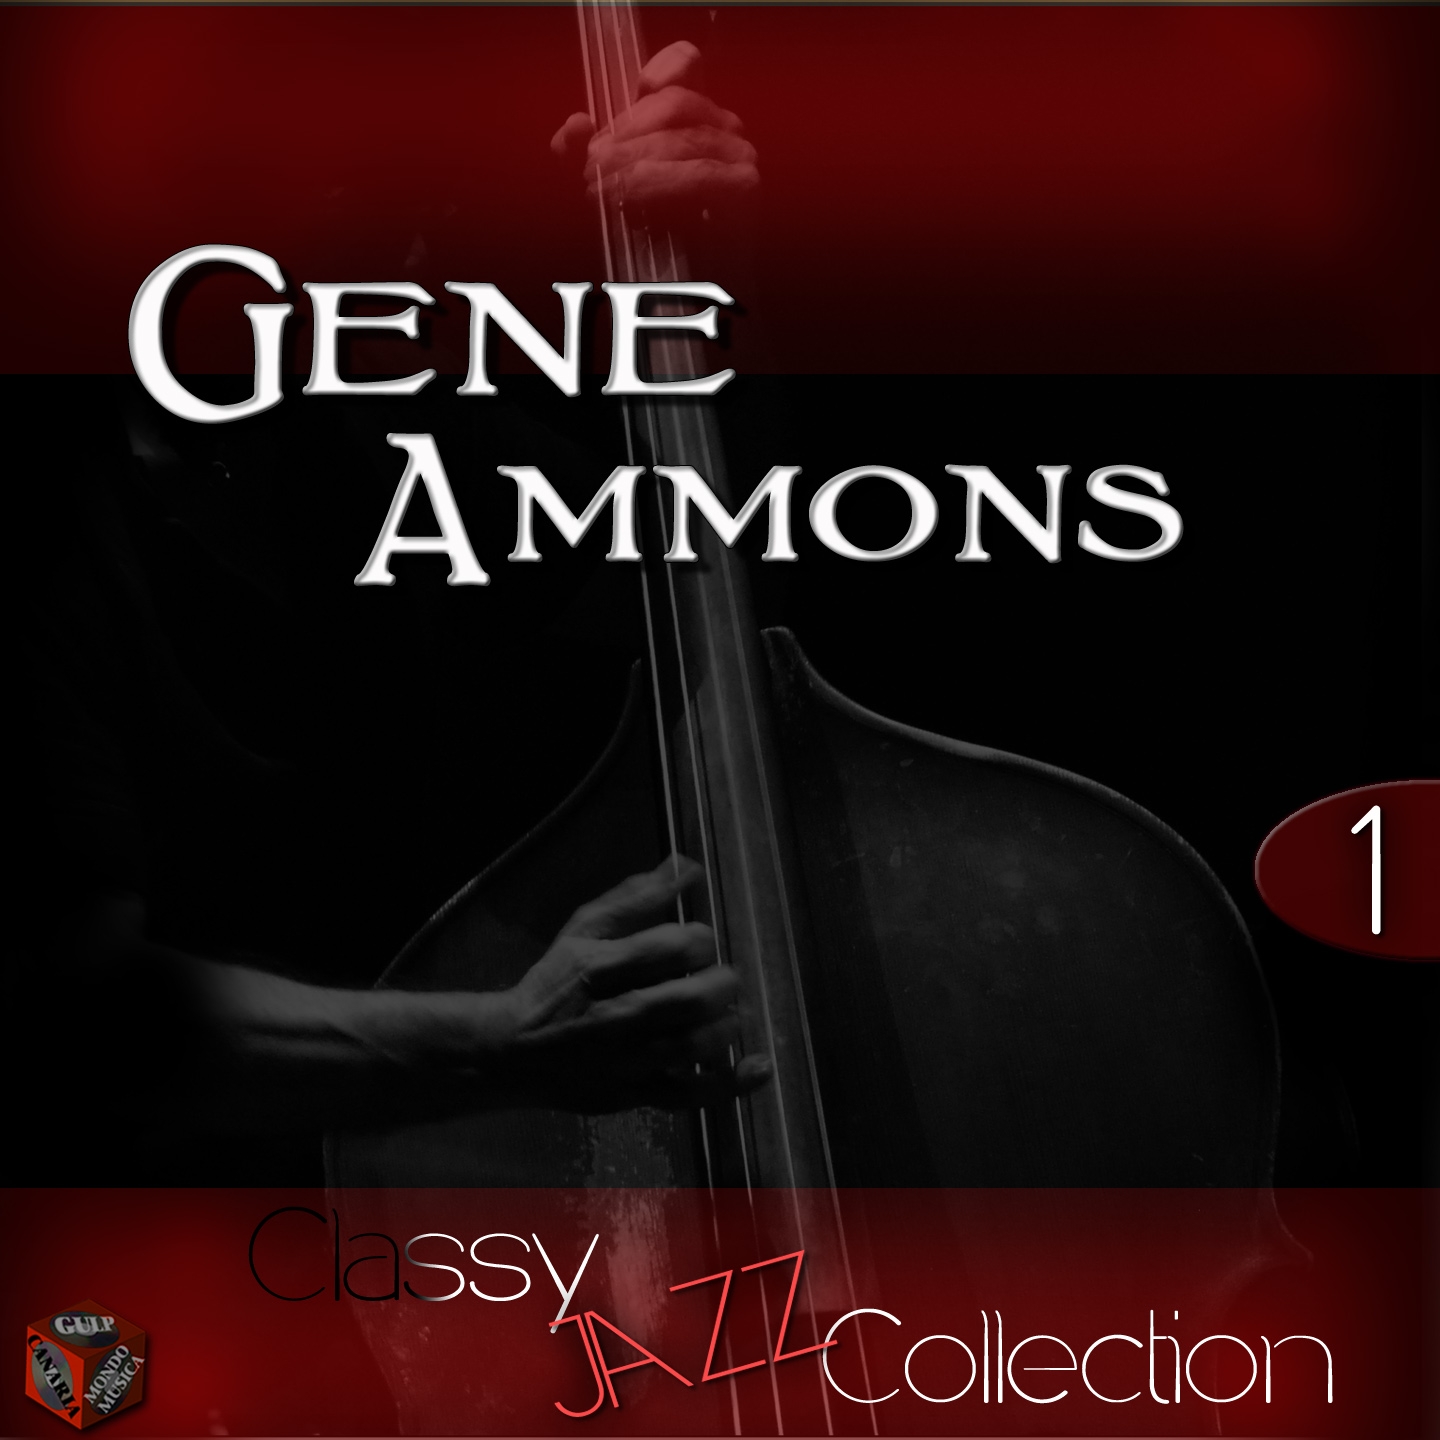 Classy Jazz Collection: Gene Ammons, Vol. 1